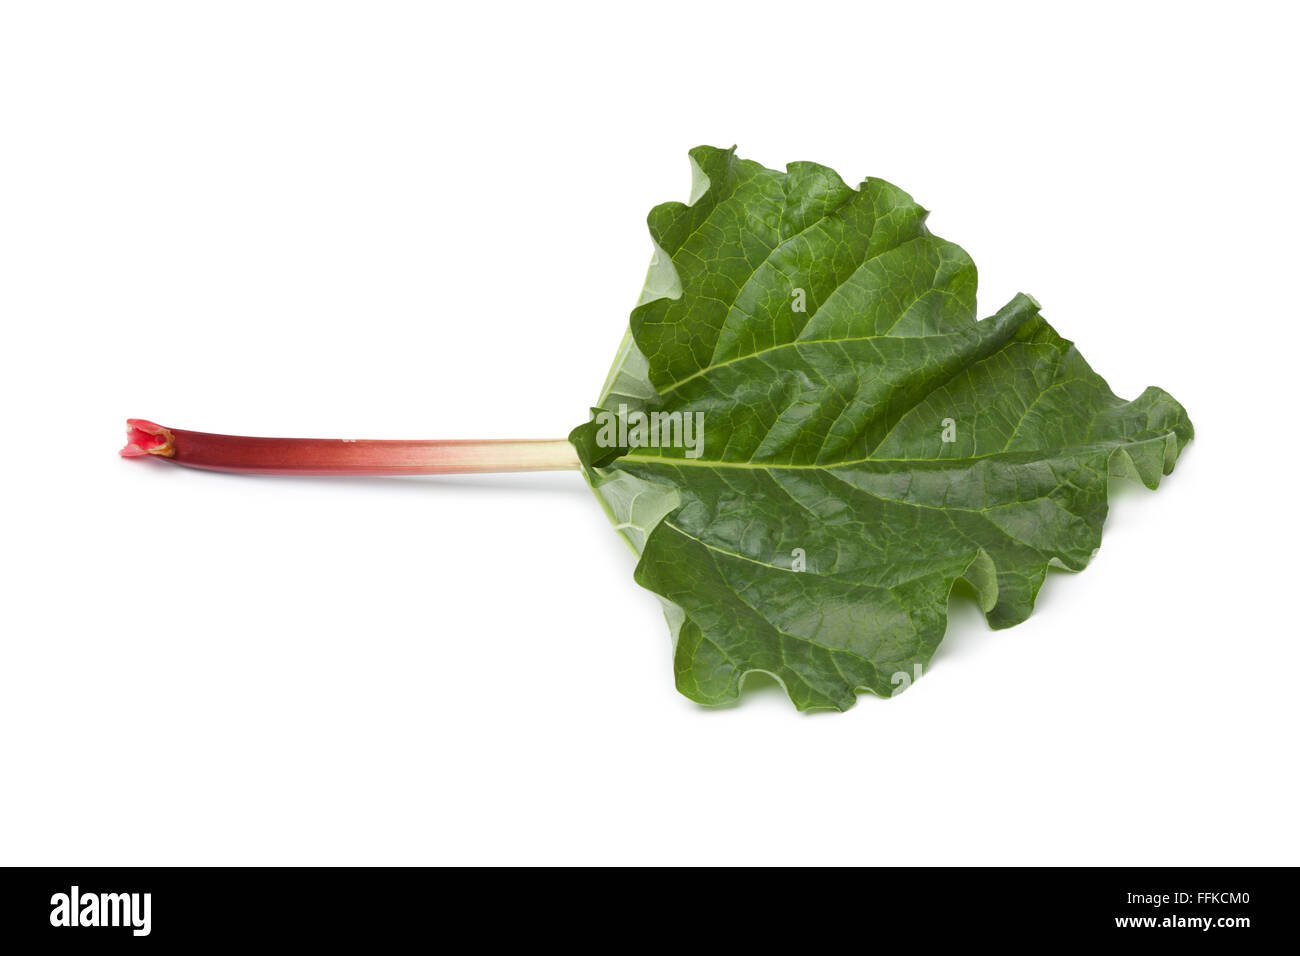 Fresh Rhubarb stalk and leaf on white background Stock Photo